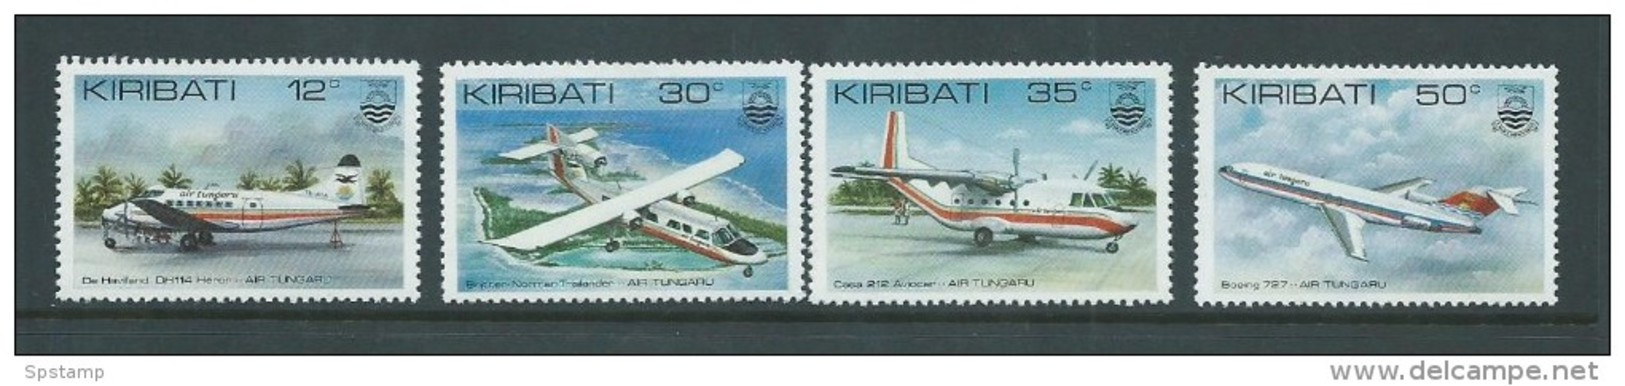 Kiribati 1982 Air Tungaru & Plane Set 4 MNH - Kiribati (1979-...)